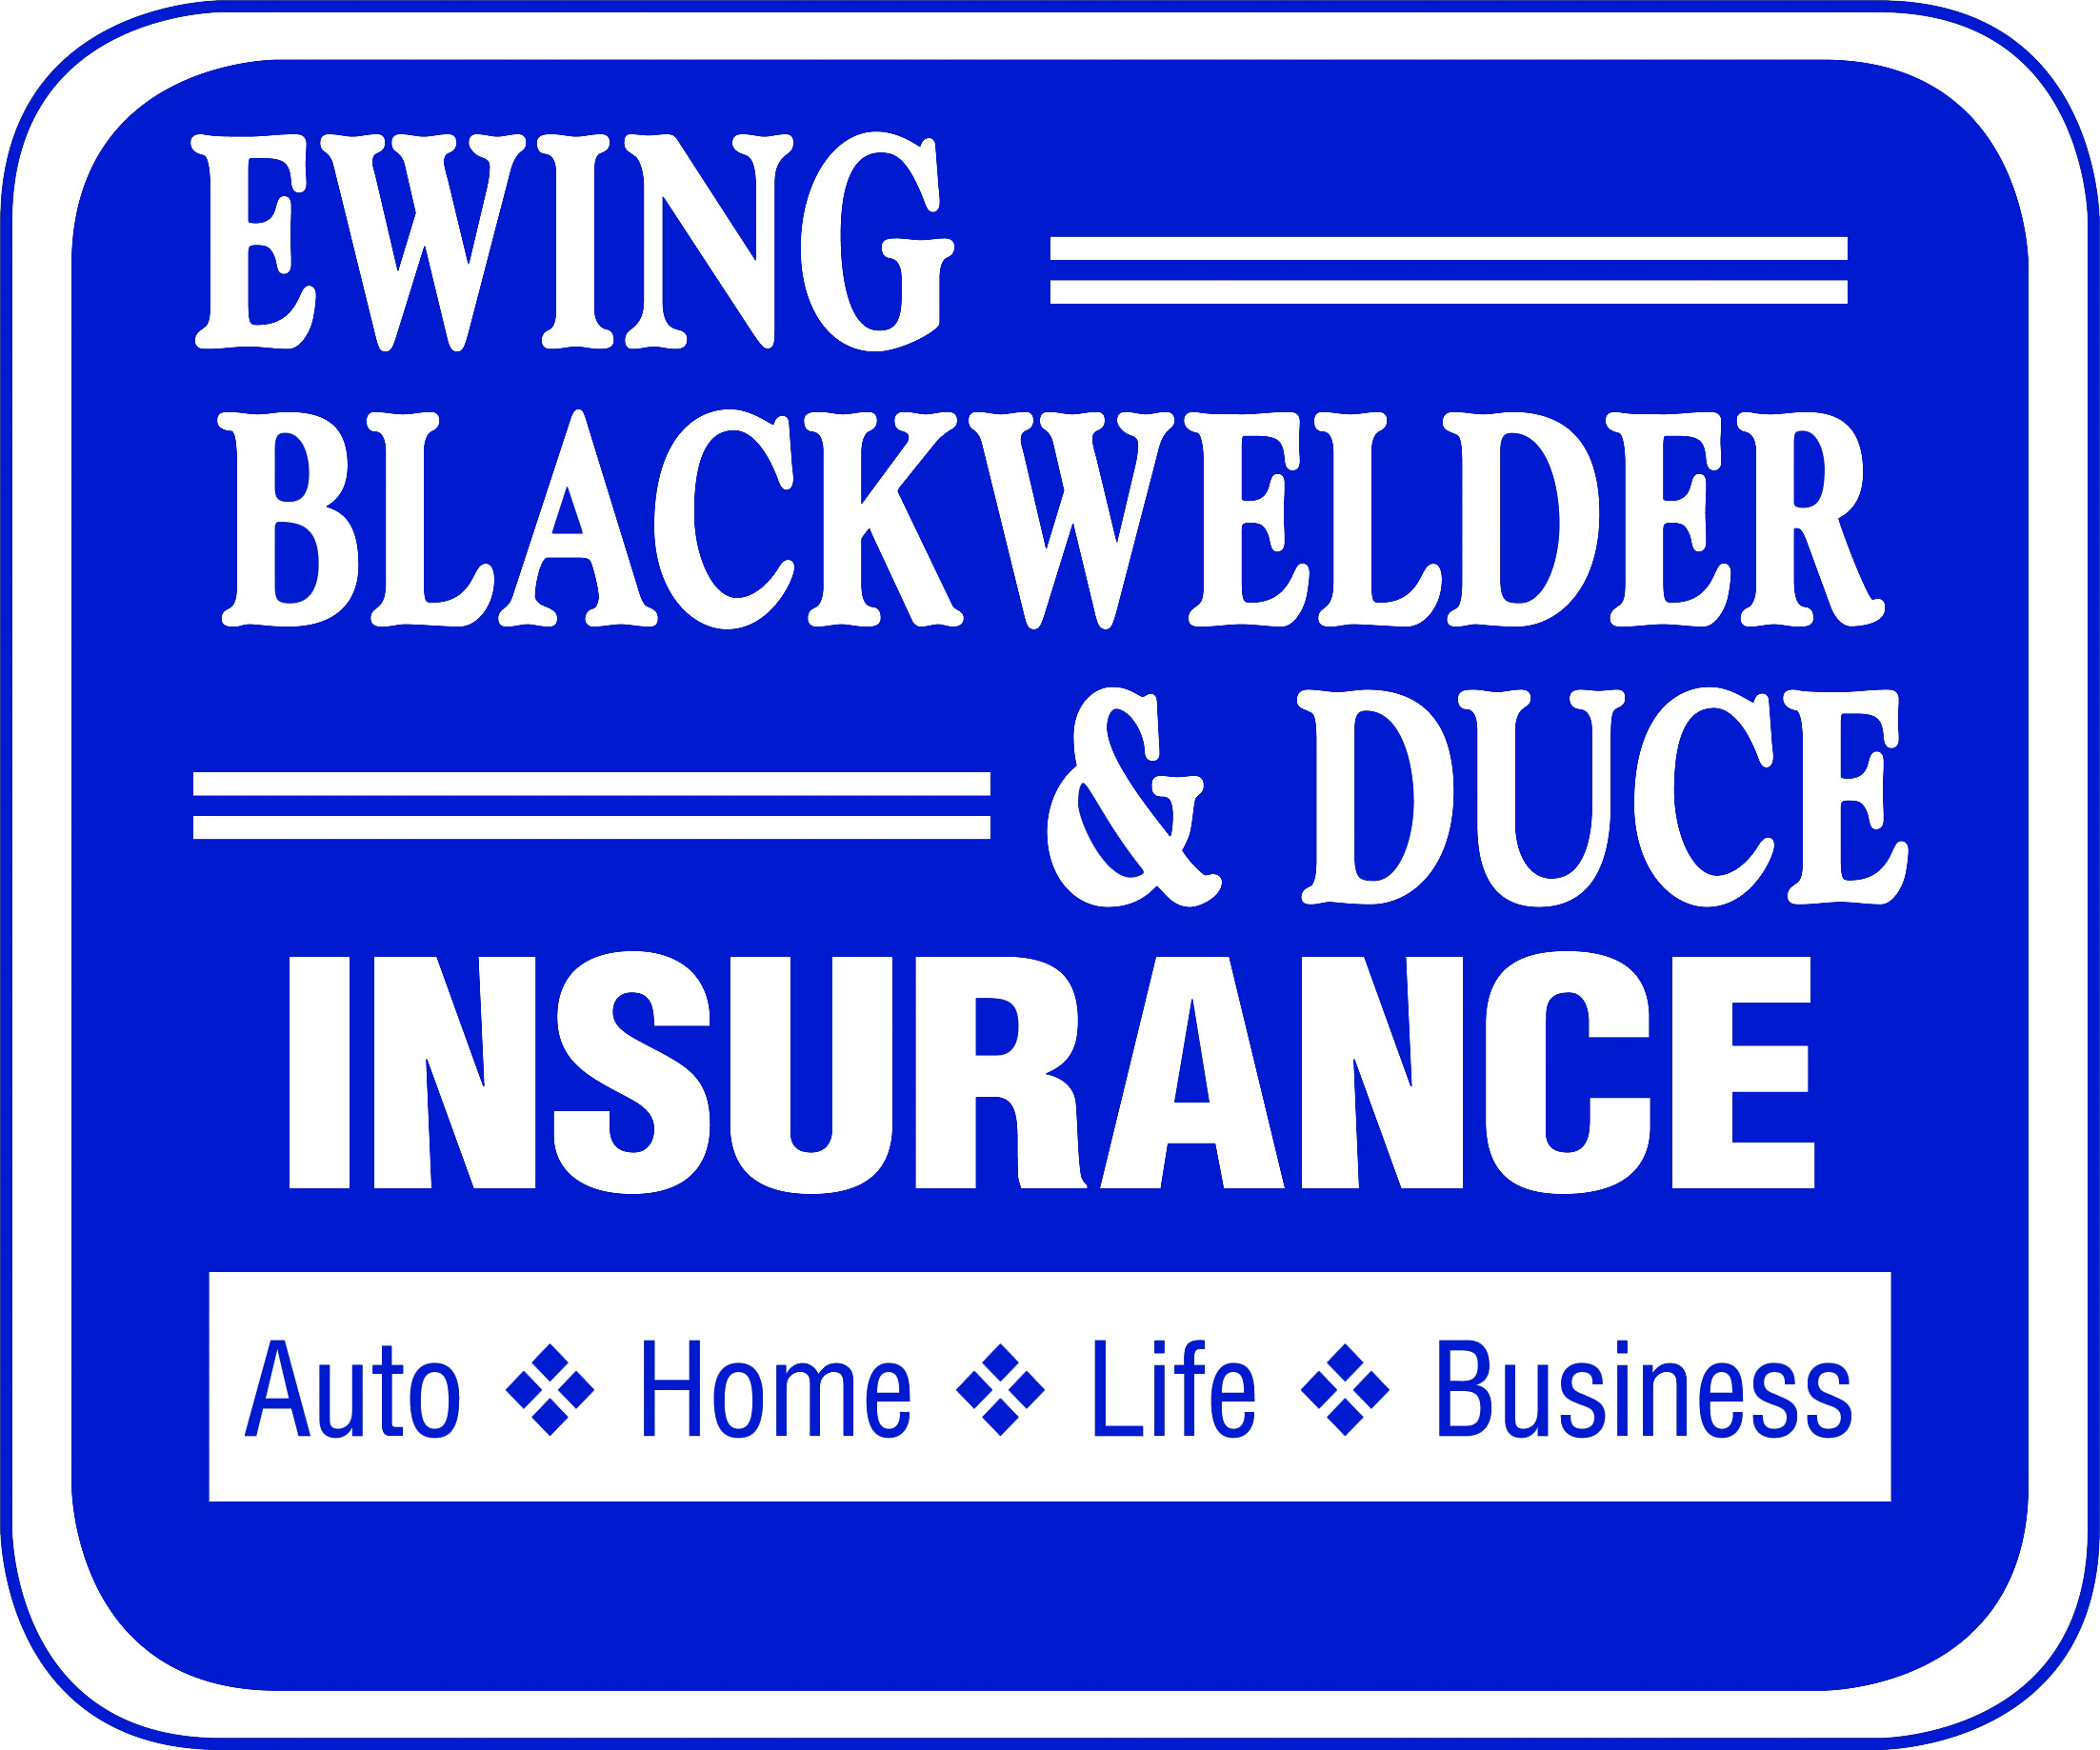 Ewing, Blackwelder & Duce Insurance Inc's logo